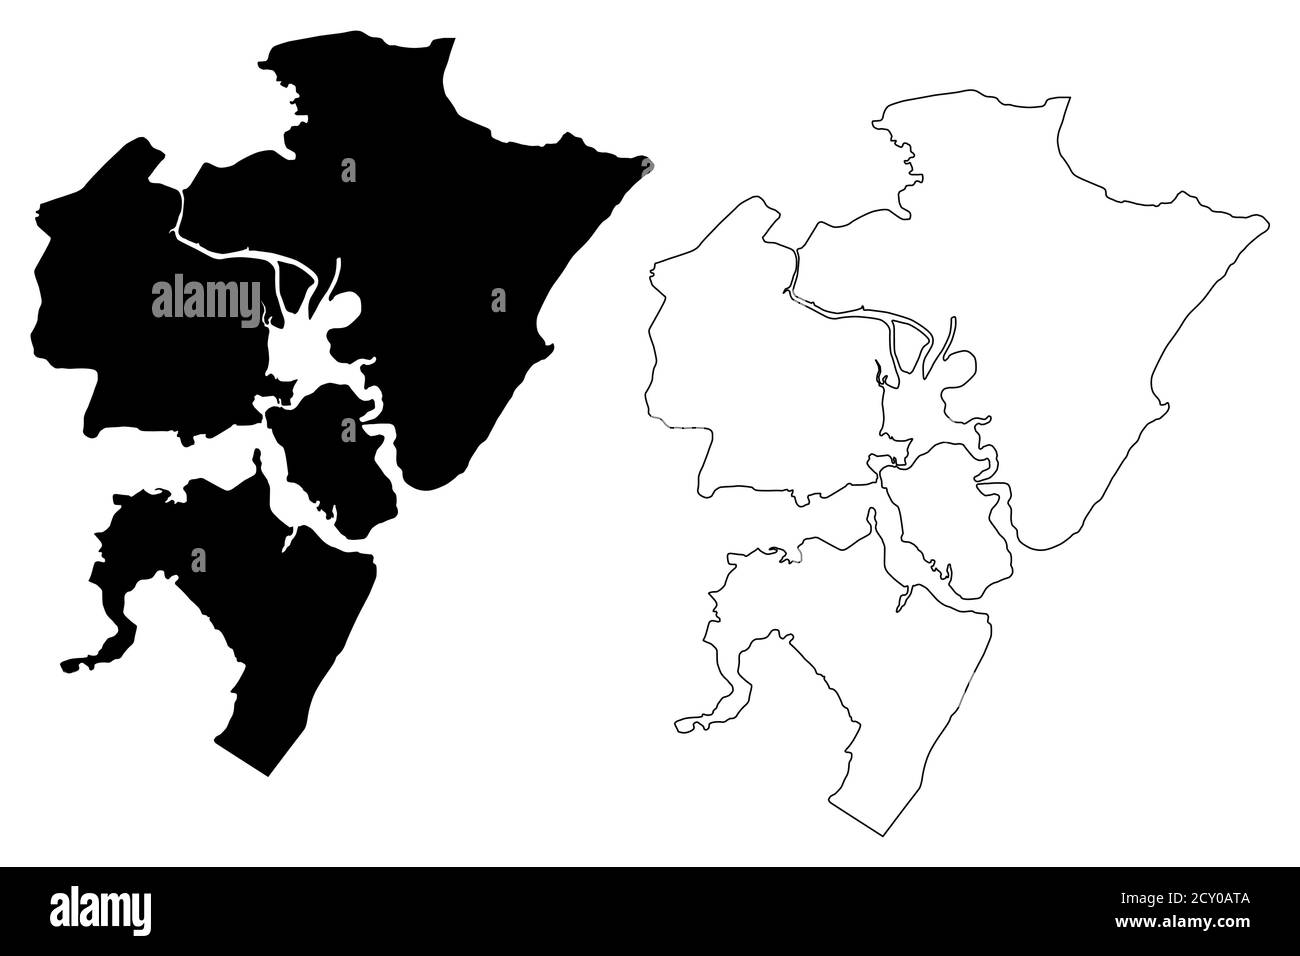 Mombasa Grafschaft und Stadt (Republik Kenia, Küstenprovinz) Karte Vektor Illustration, scribble Skizze Mombasa Karte Stock Vektor